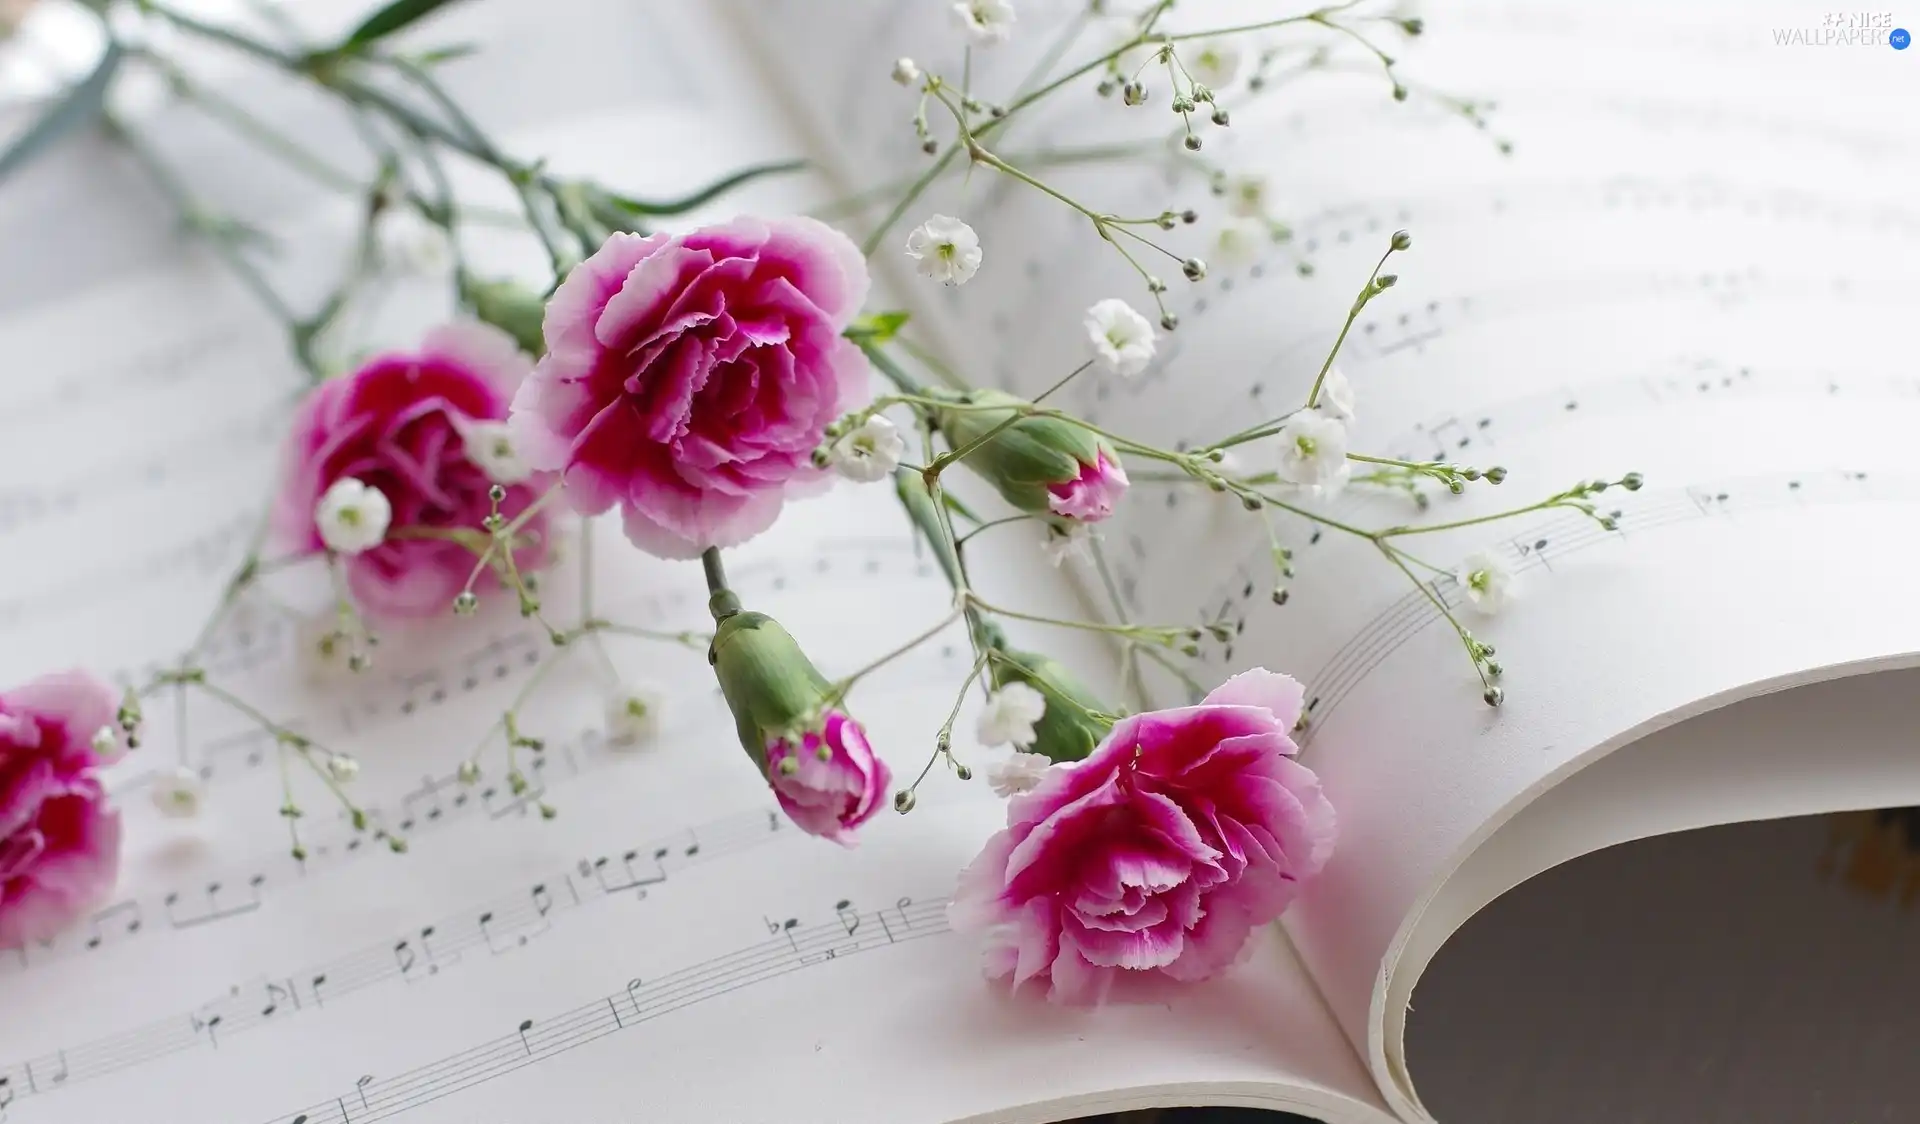 Tunes, Flowers, cloves